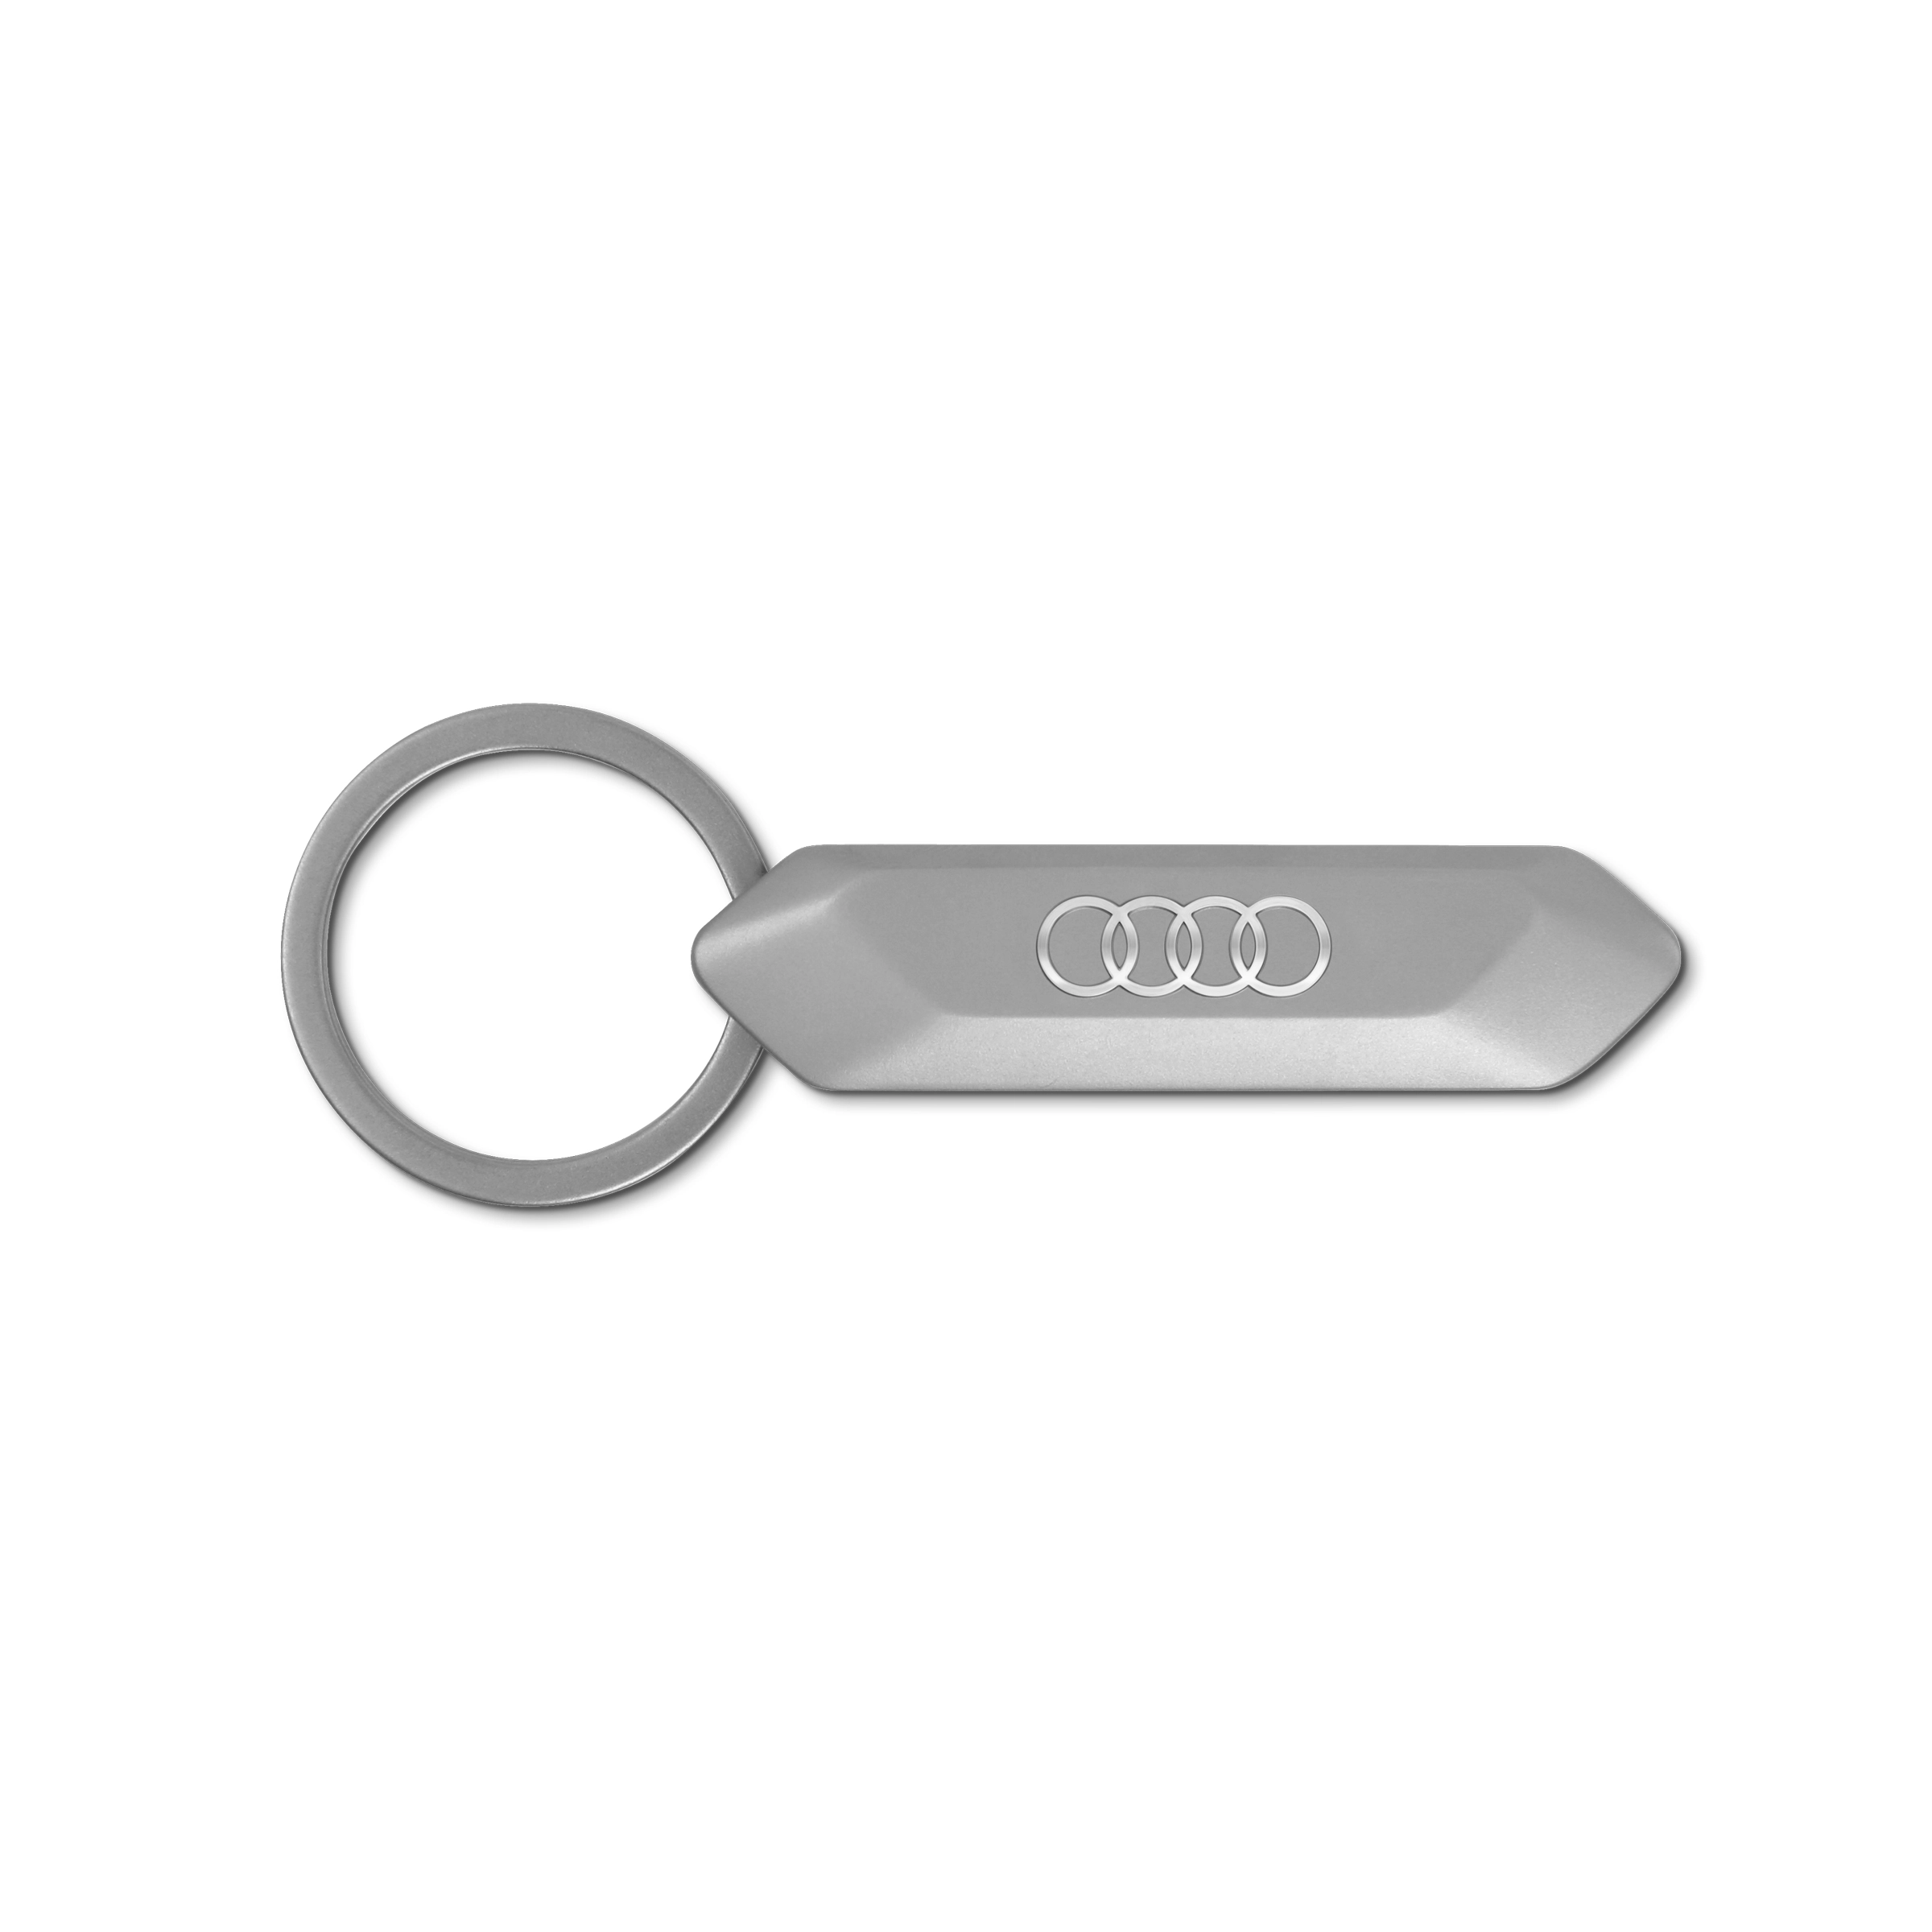 Audi Schlüsselanhänger Edelstahl silber 3182100400